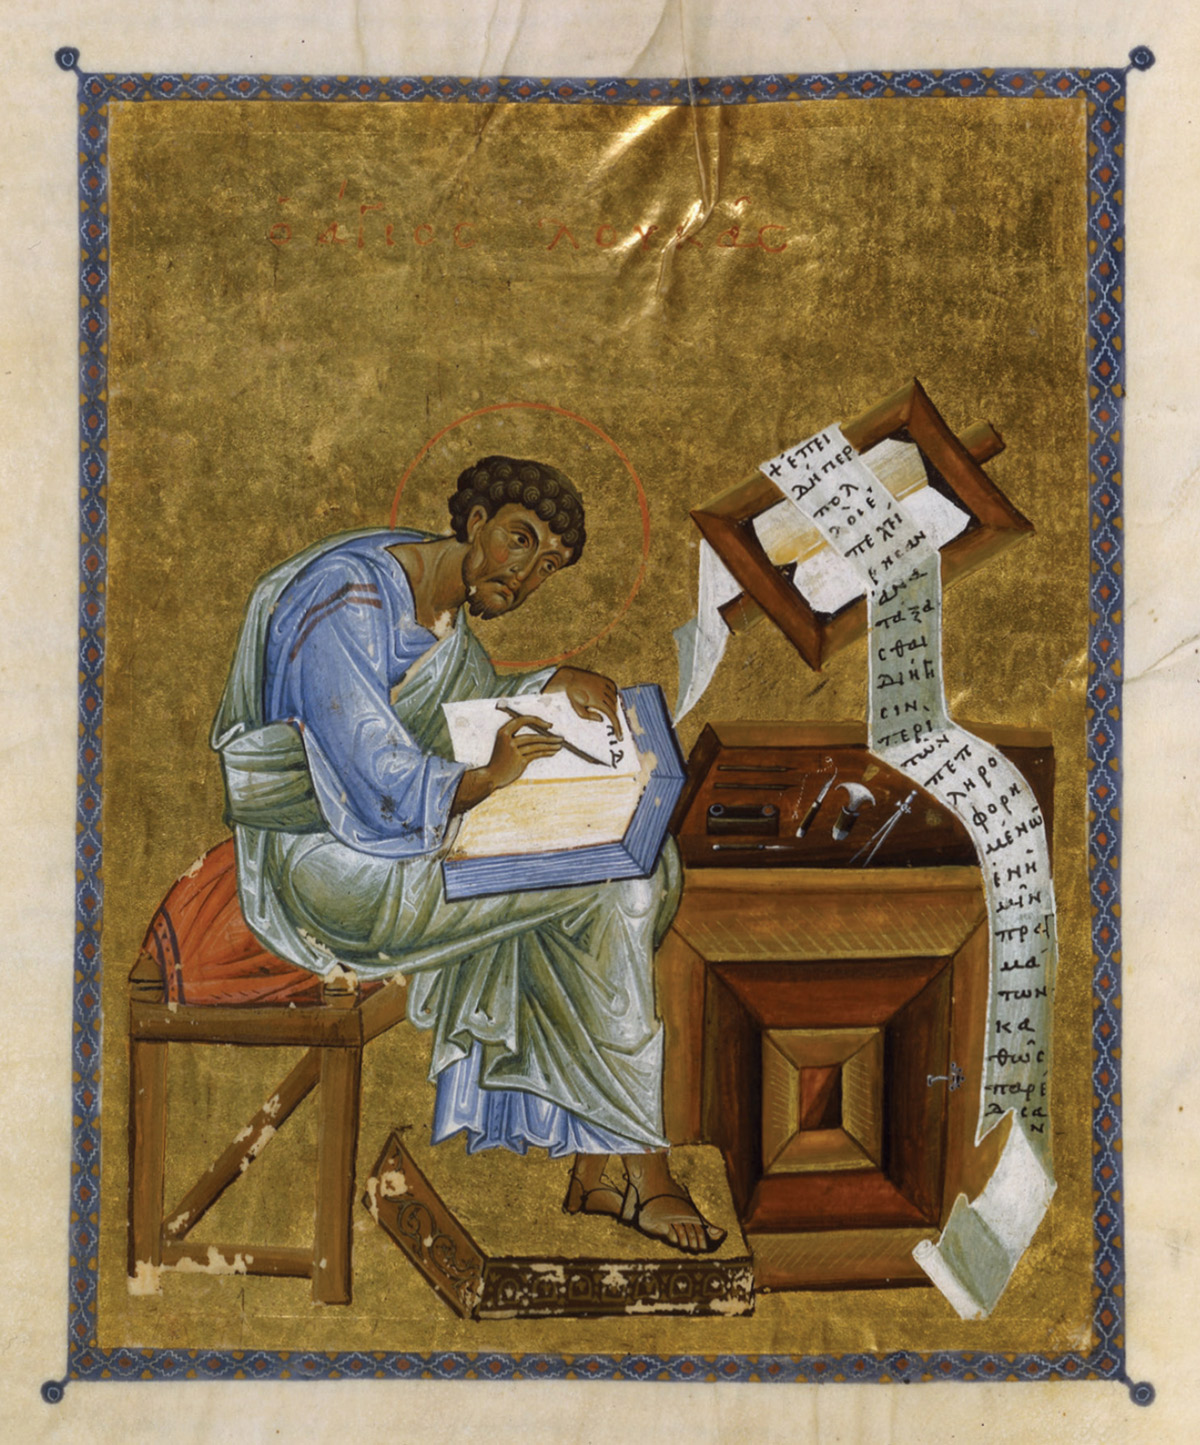 A twelfth-century gospel book illustration depicting Saint Mark the Evangelist writing on a scroll.